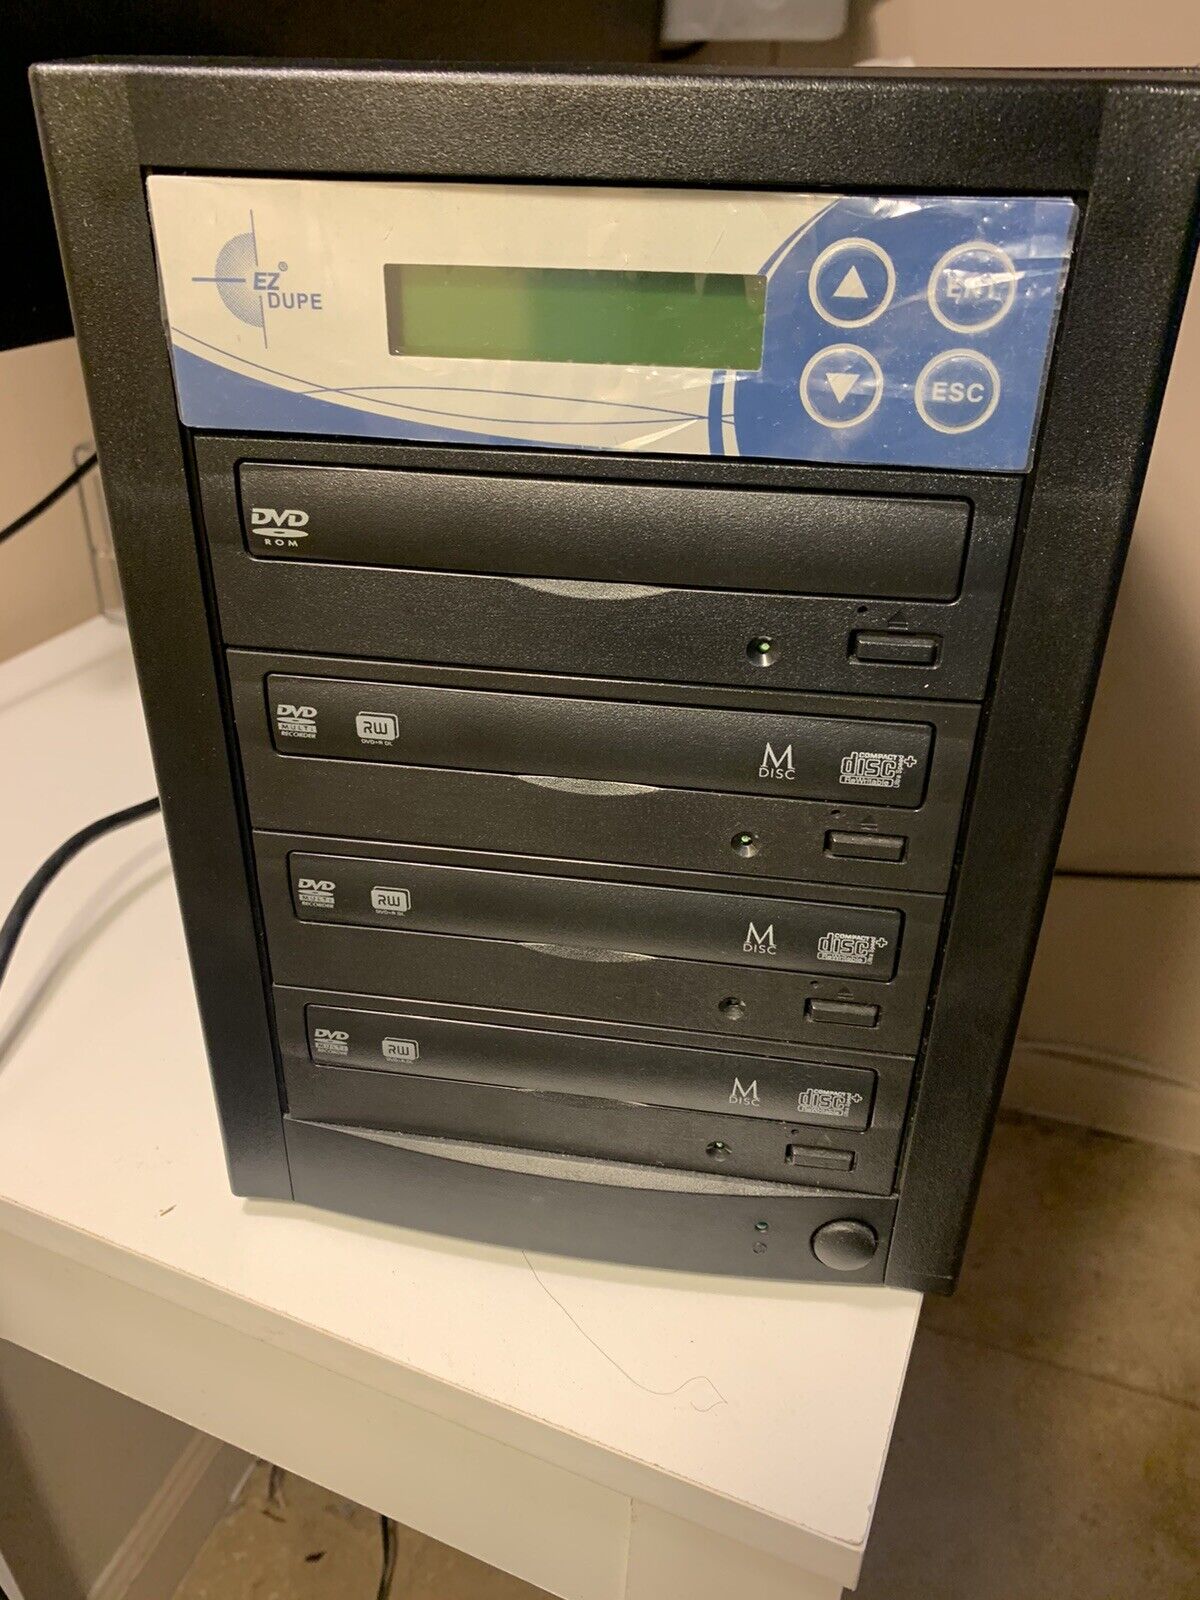 GENTLY USED EZ DUPE 3-Target CD DVD RW DUPLICATOR Disk Copy Machine Copier